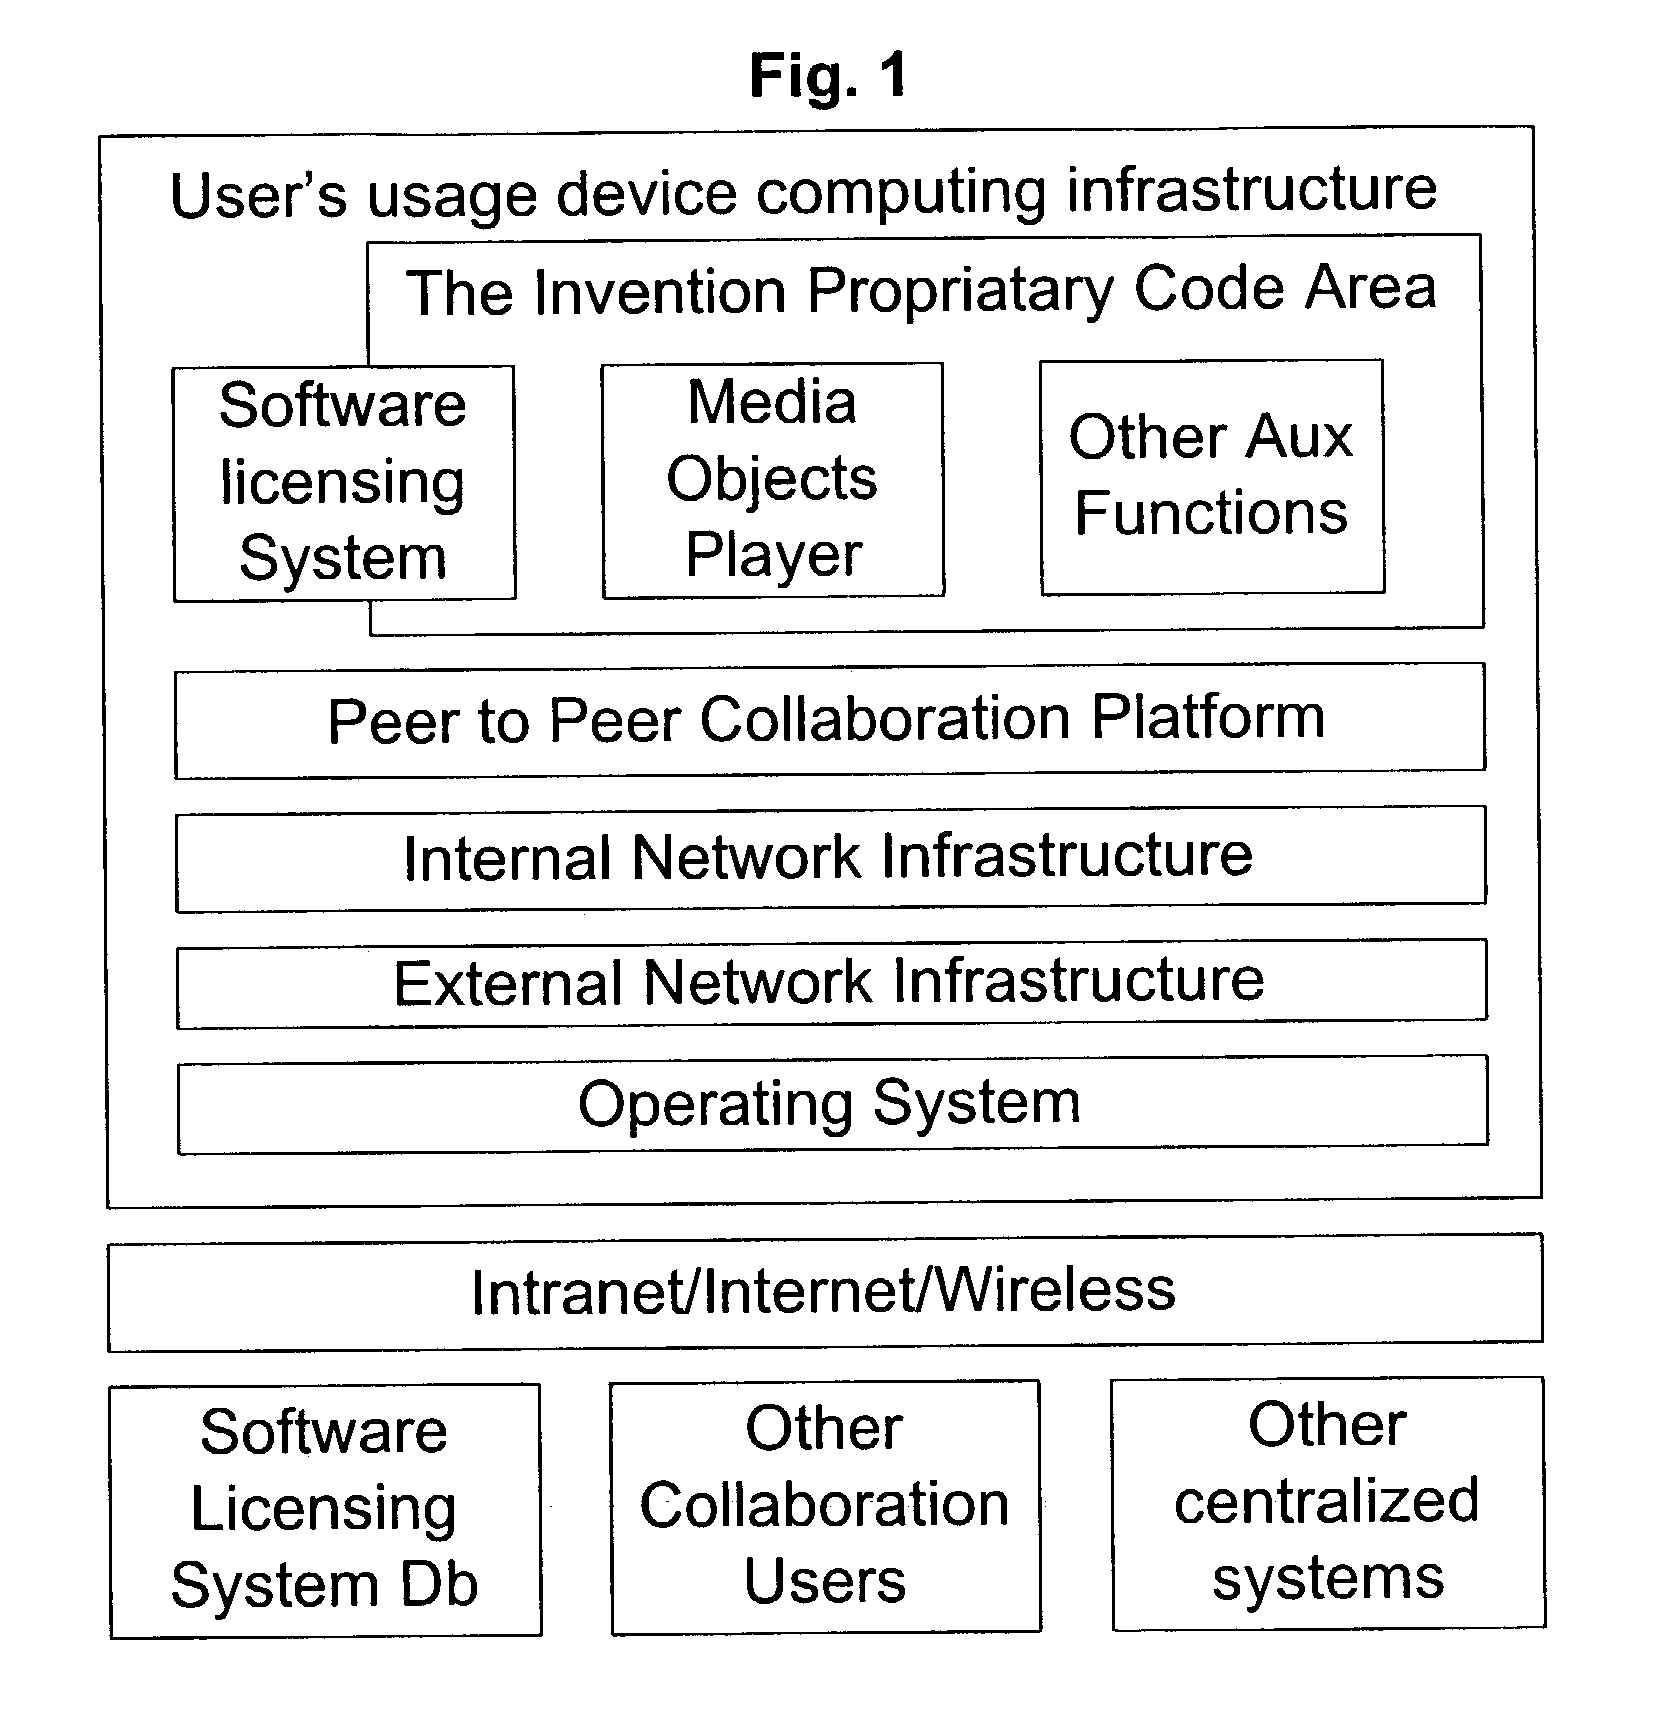 Self-replicating and self-installing software apparatus